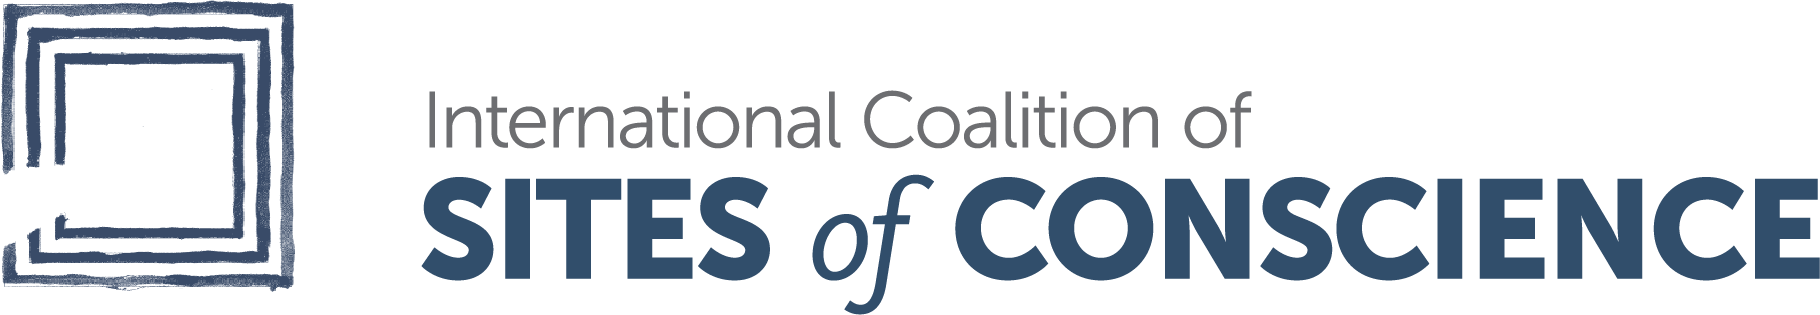 ICSC_Member-logo.png